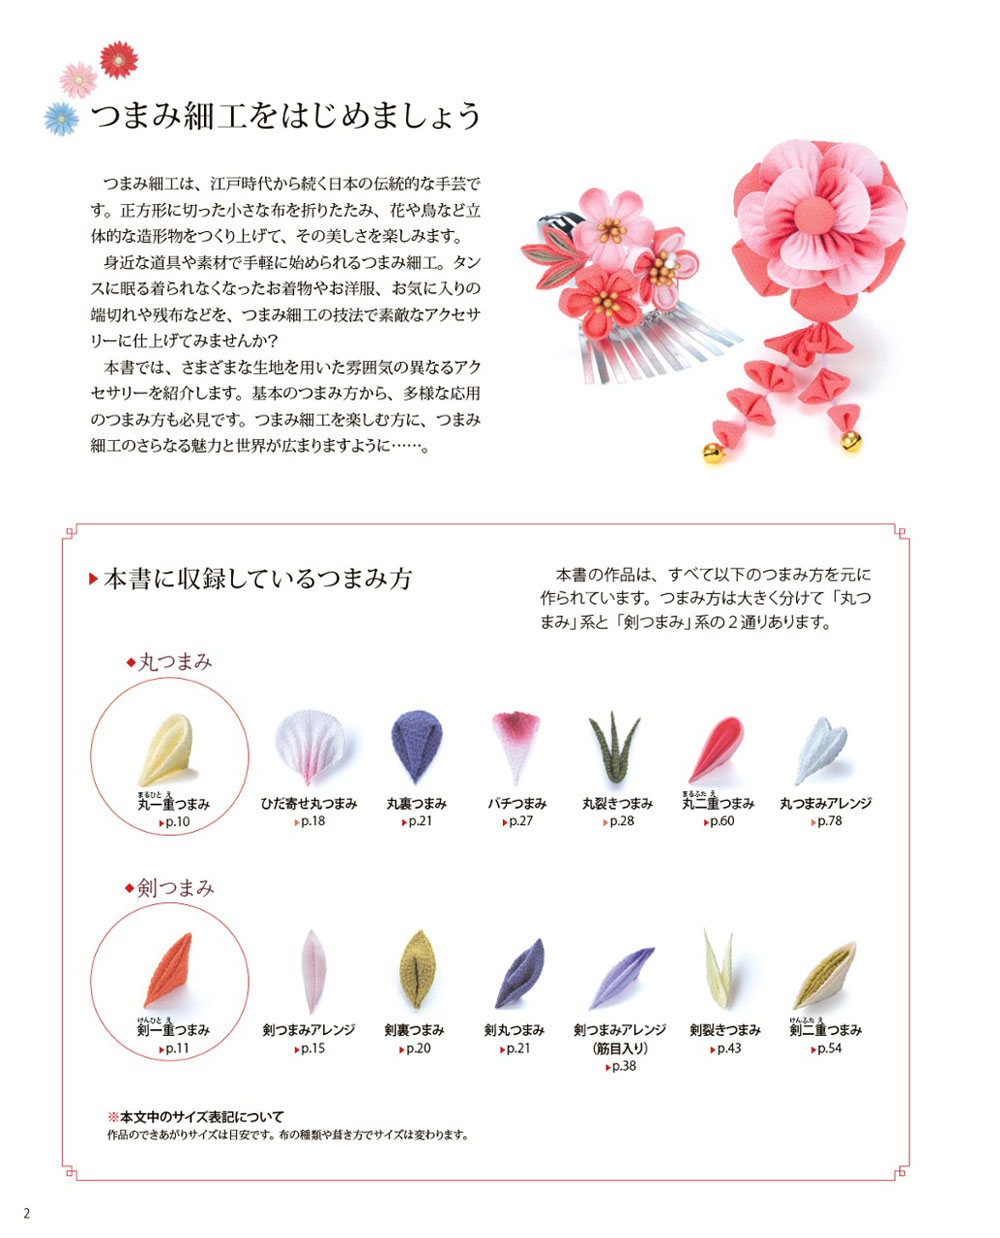 Kanzashi flower calendar